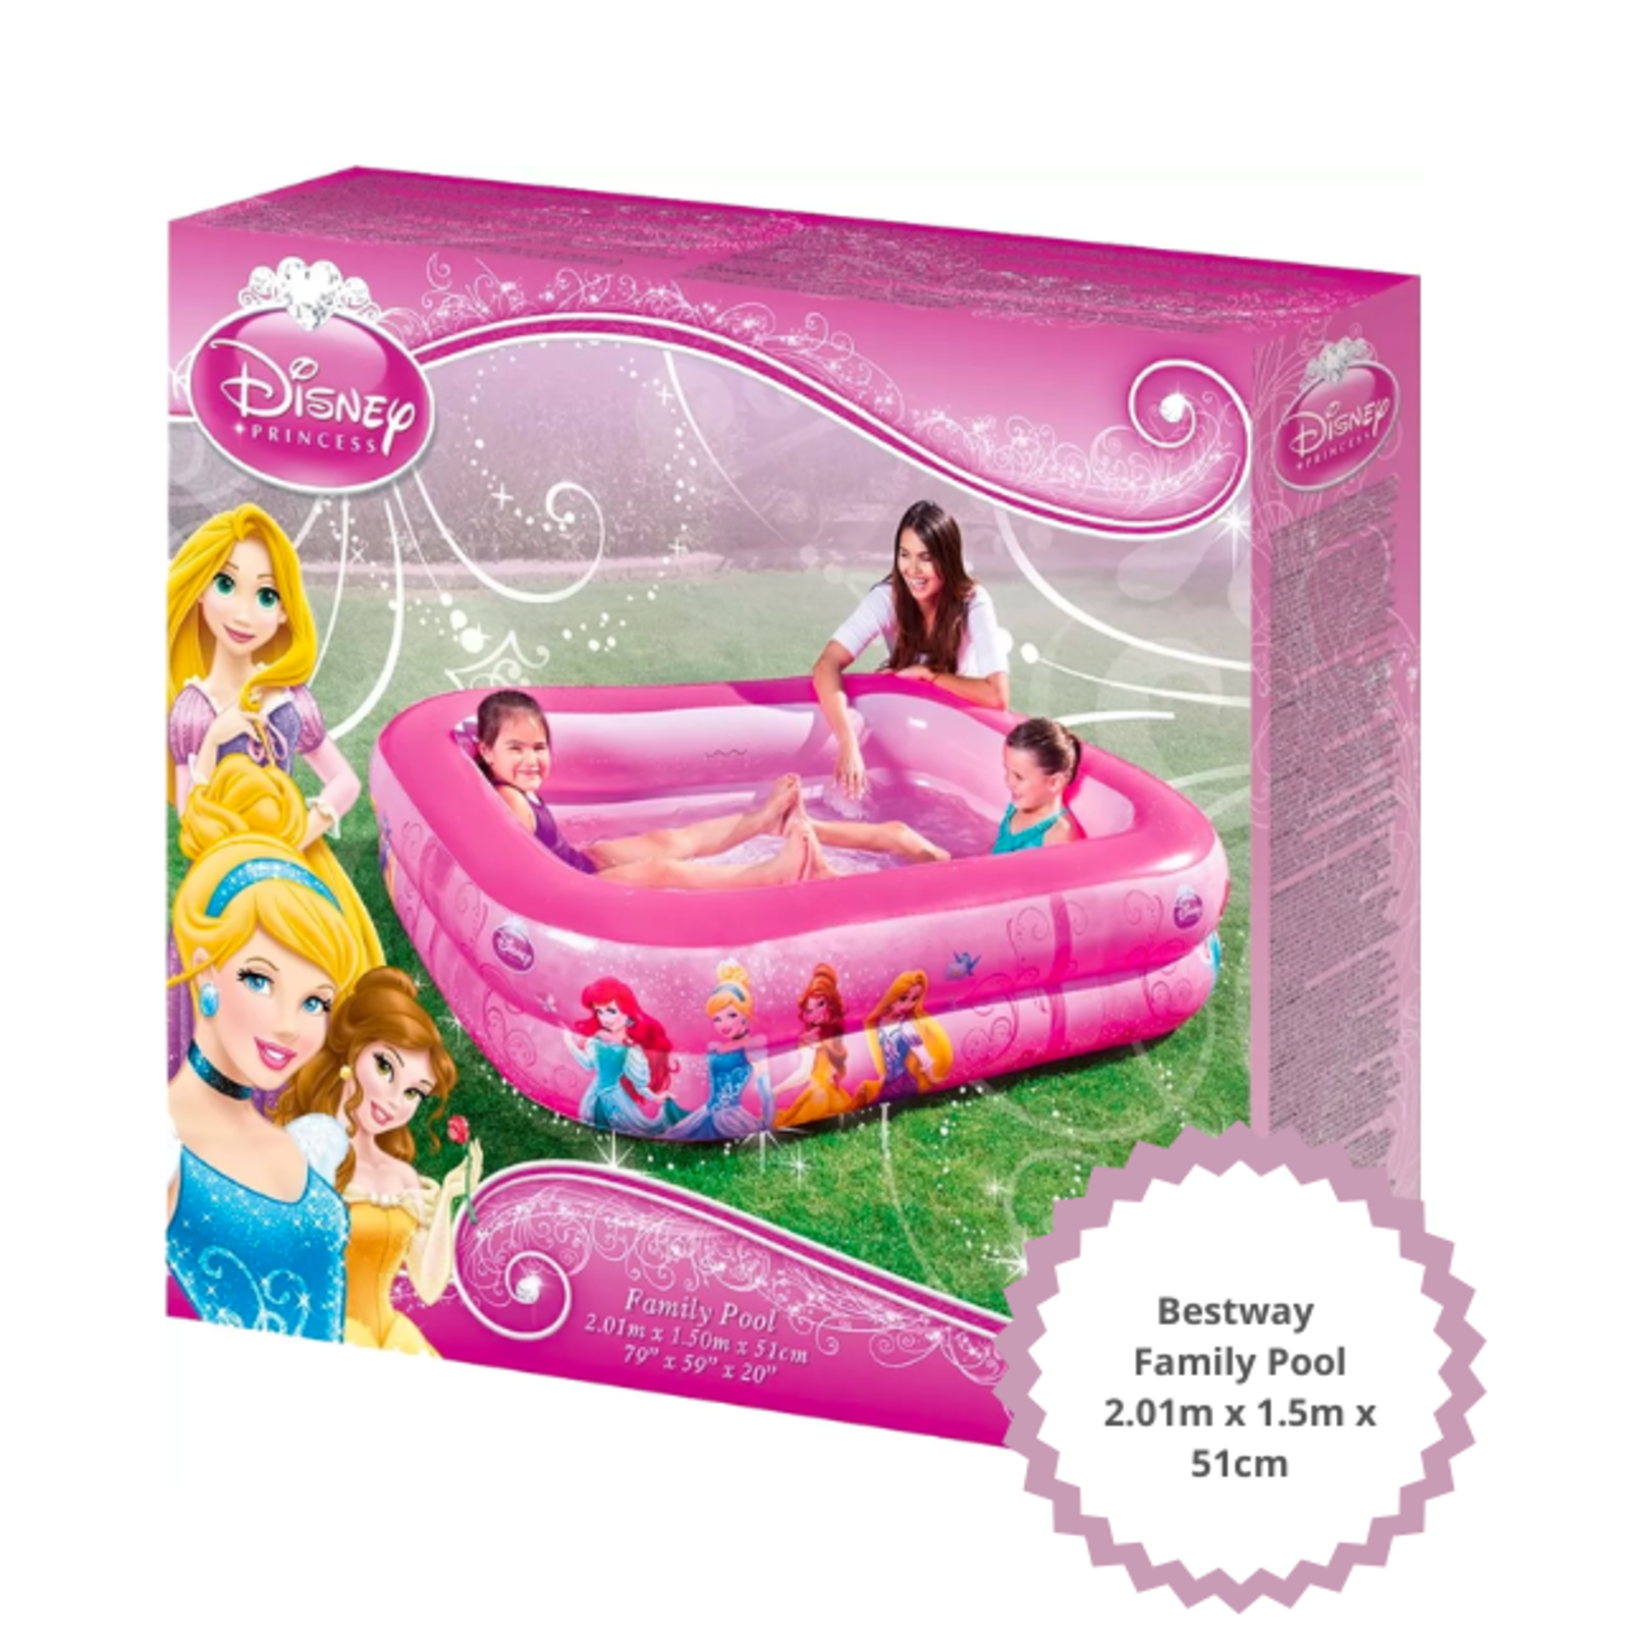 Bestway Family Pool Disney Princess 2.01m x 1.5m x 51cm